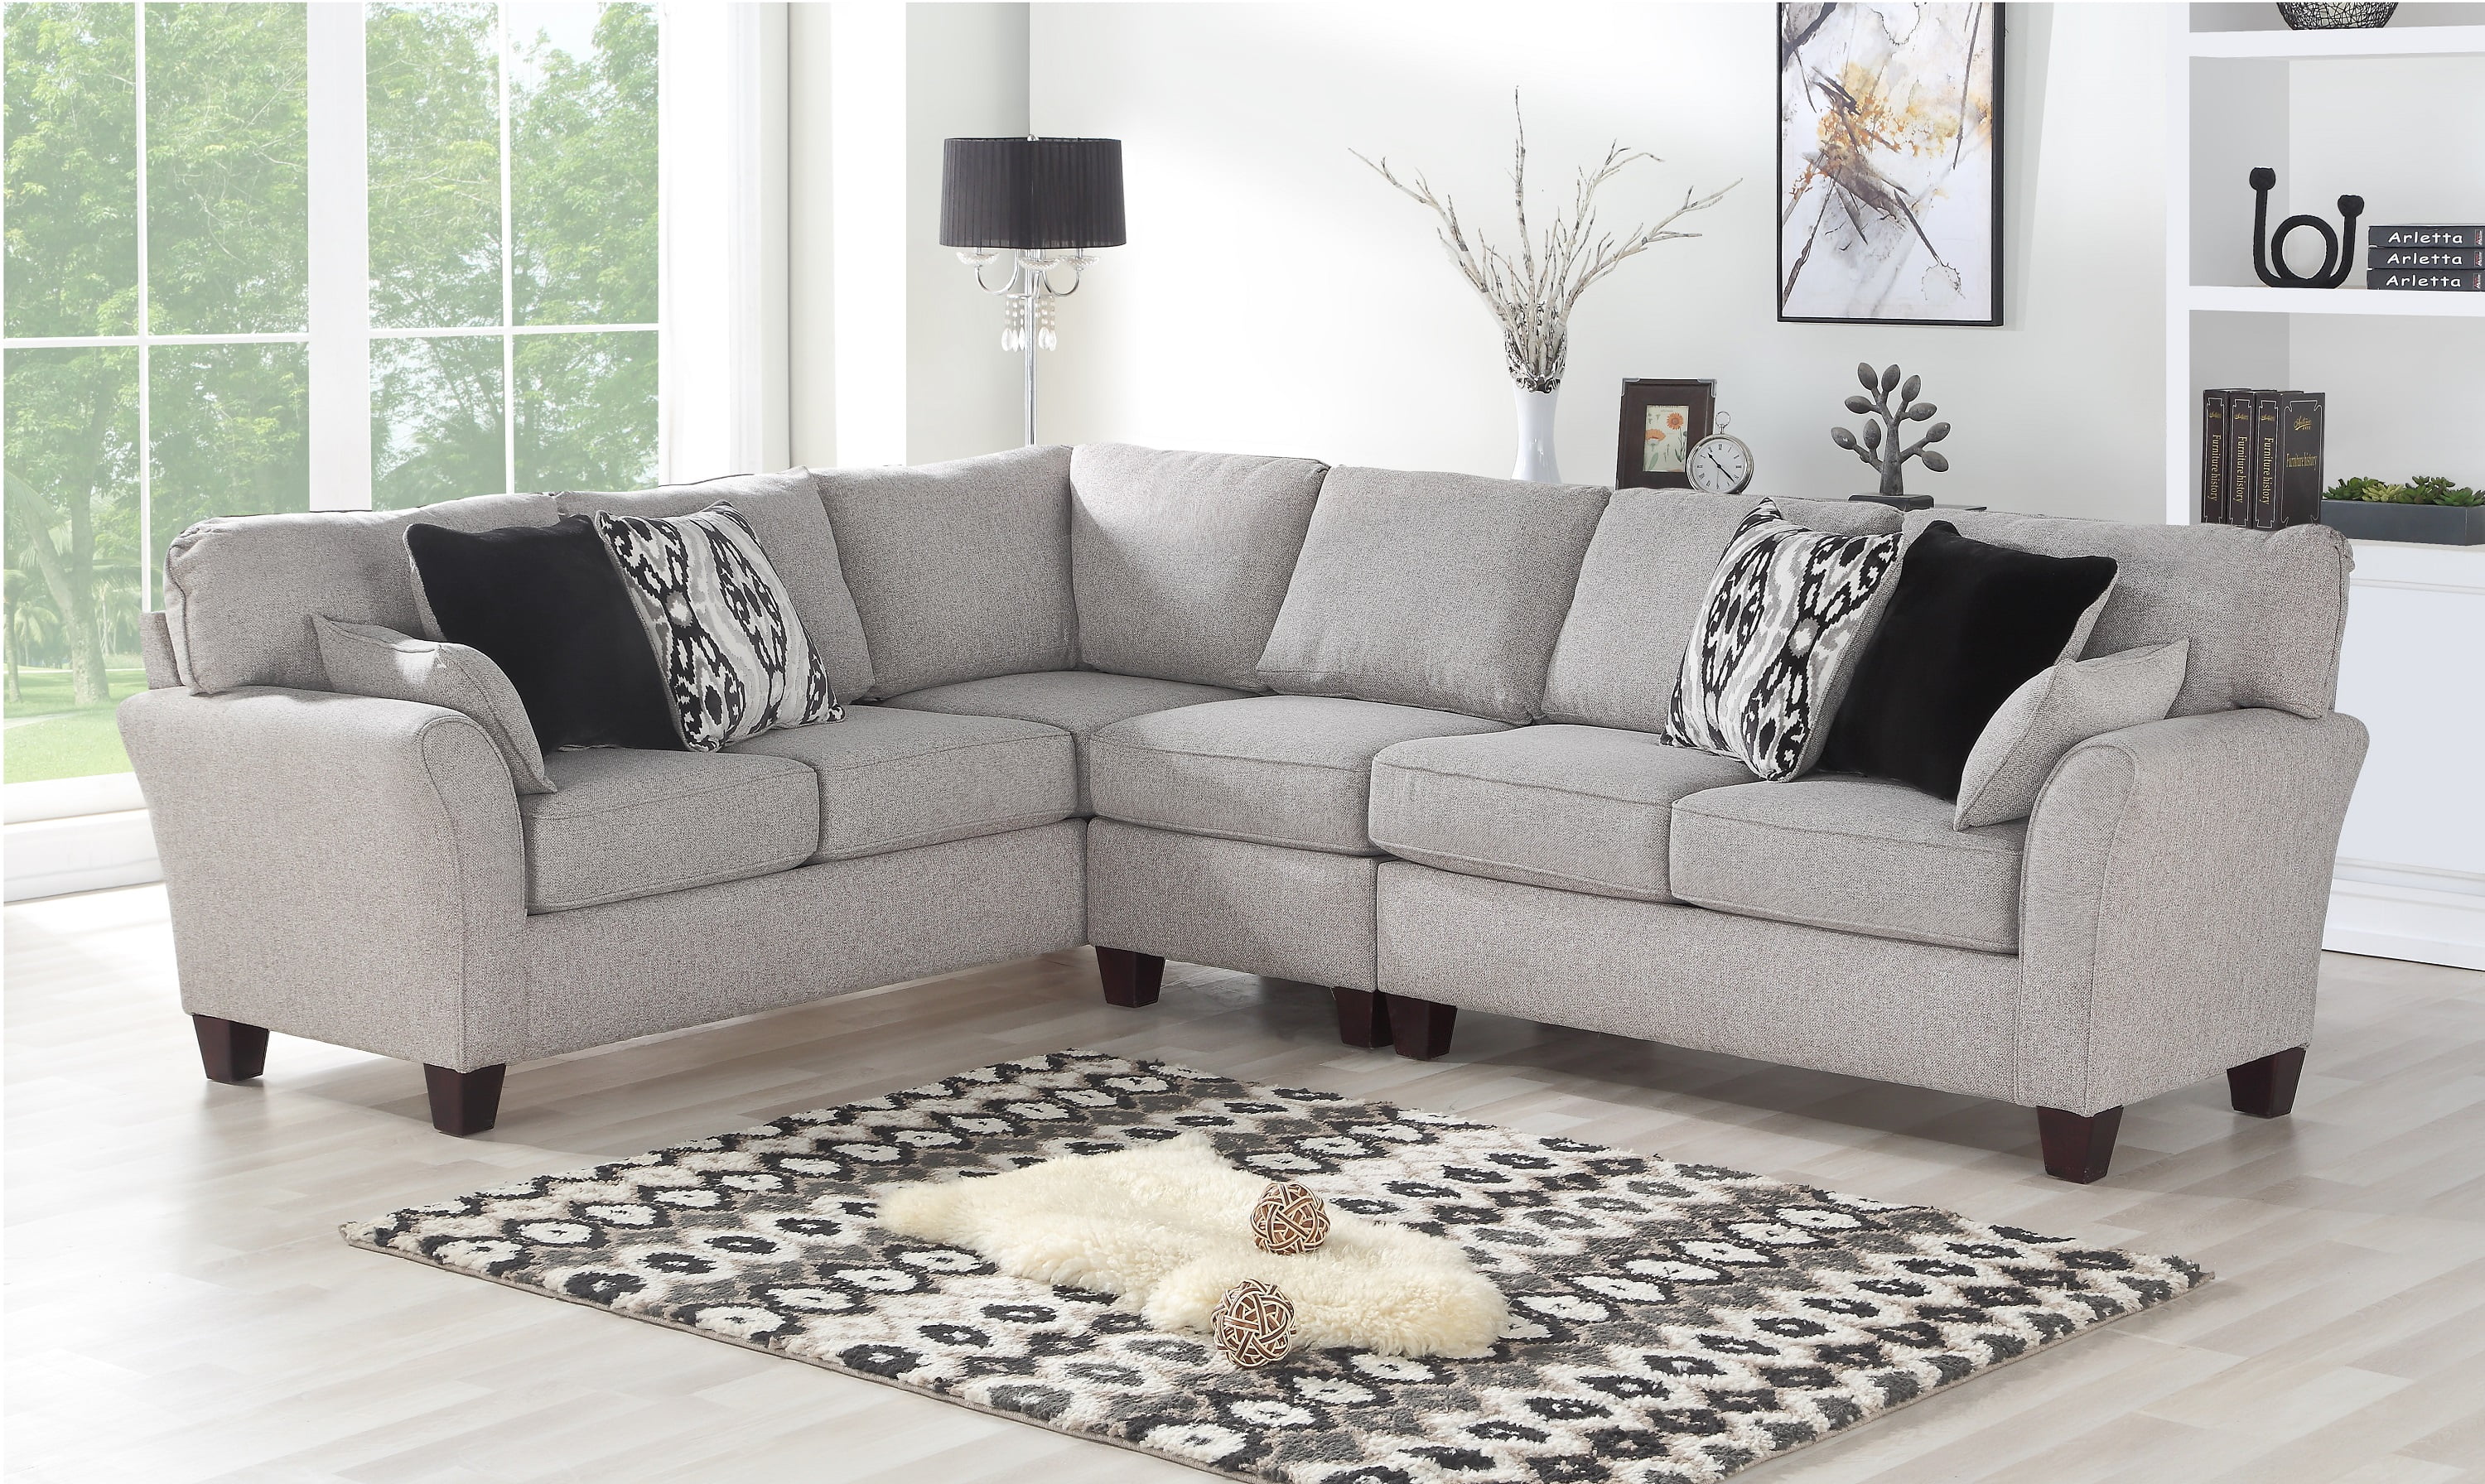 Living Room Sofa Set Price In Kerala